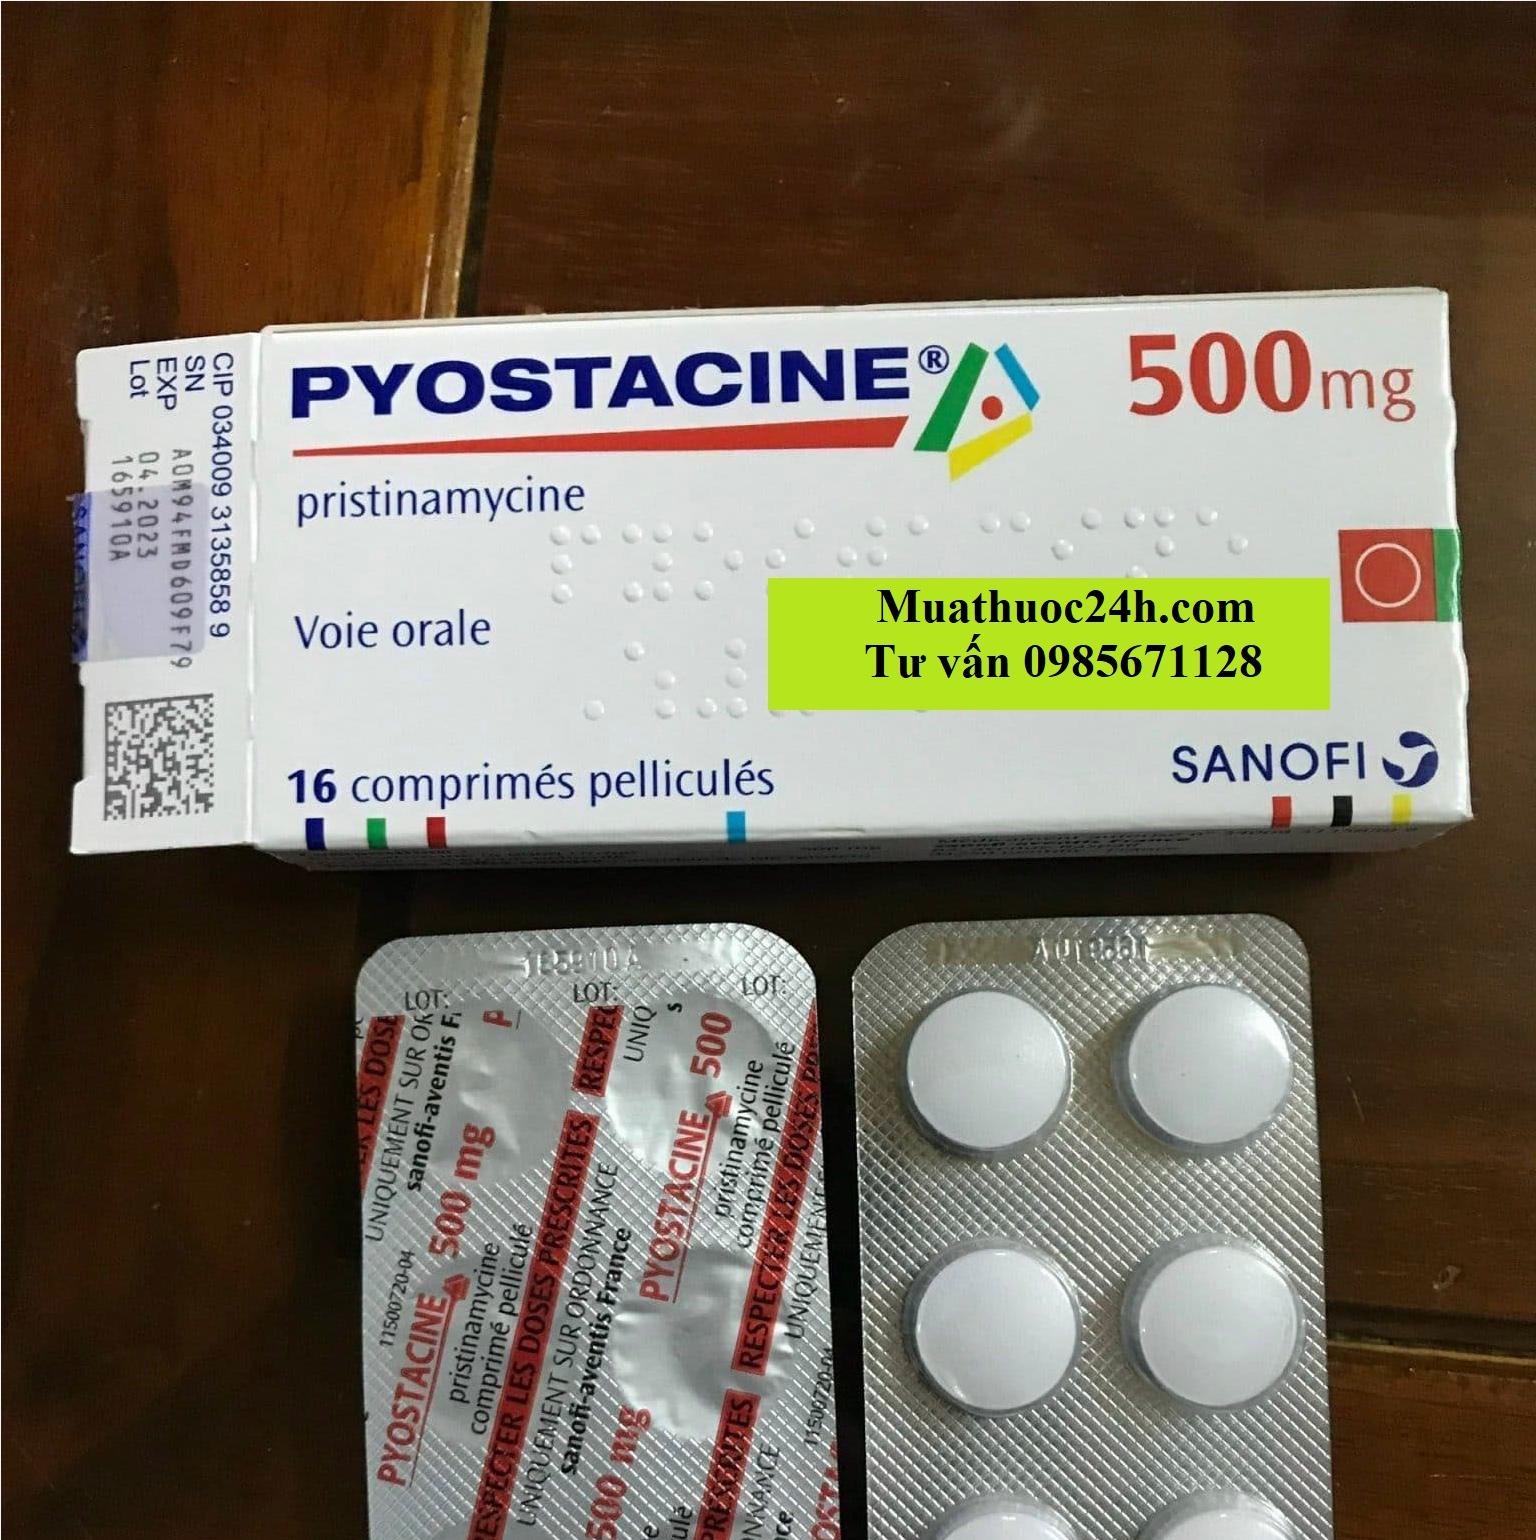 Thuốc Pyostacine 500mg Pristinamycine  giá bao nhiêu mua ở đâu